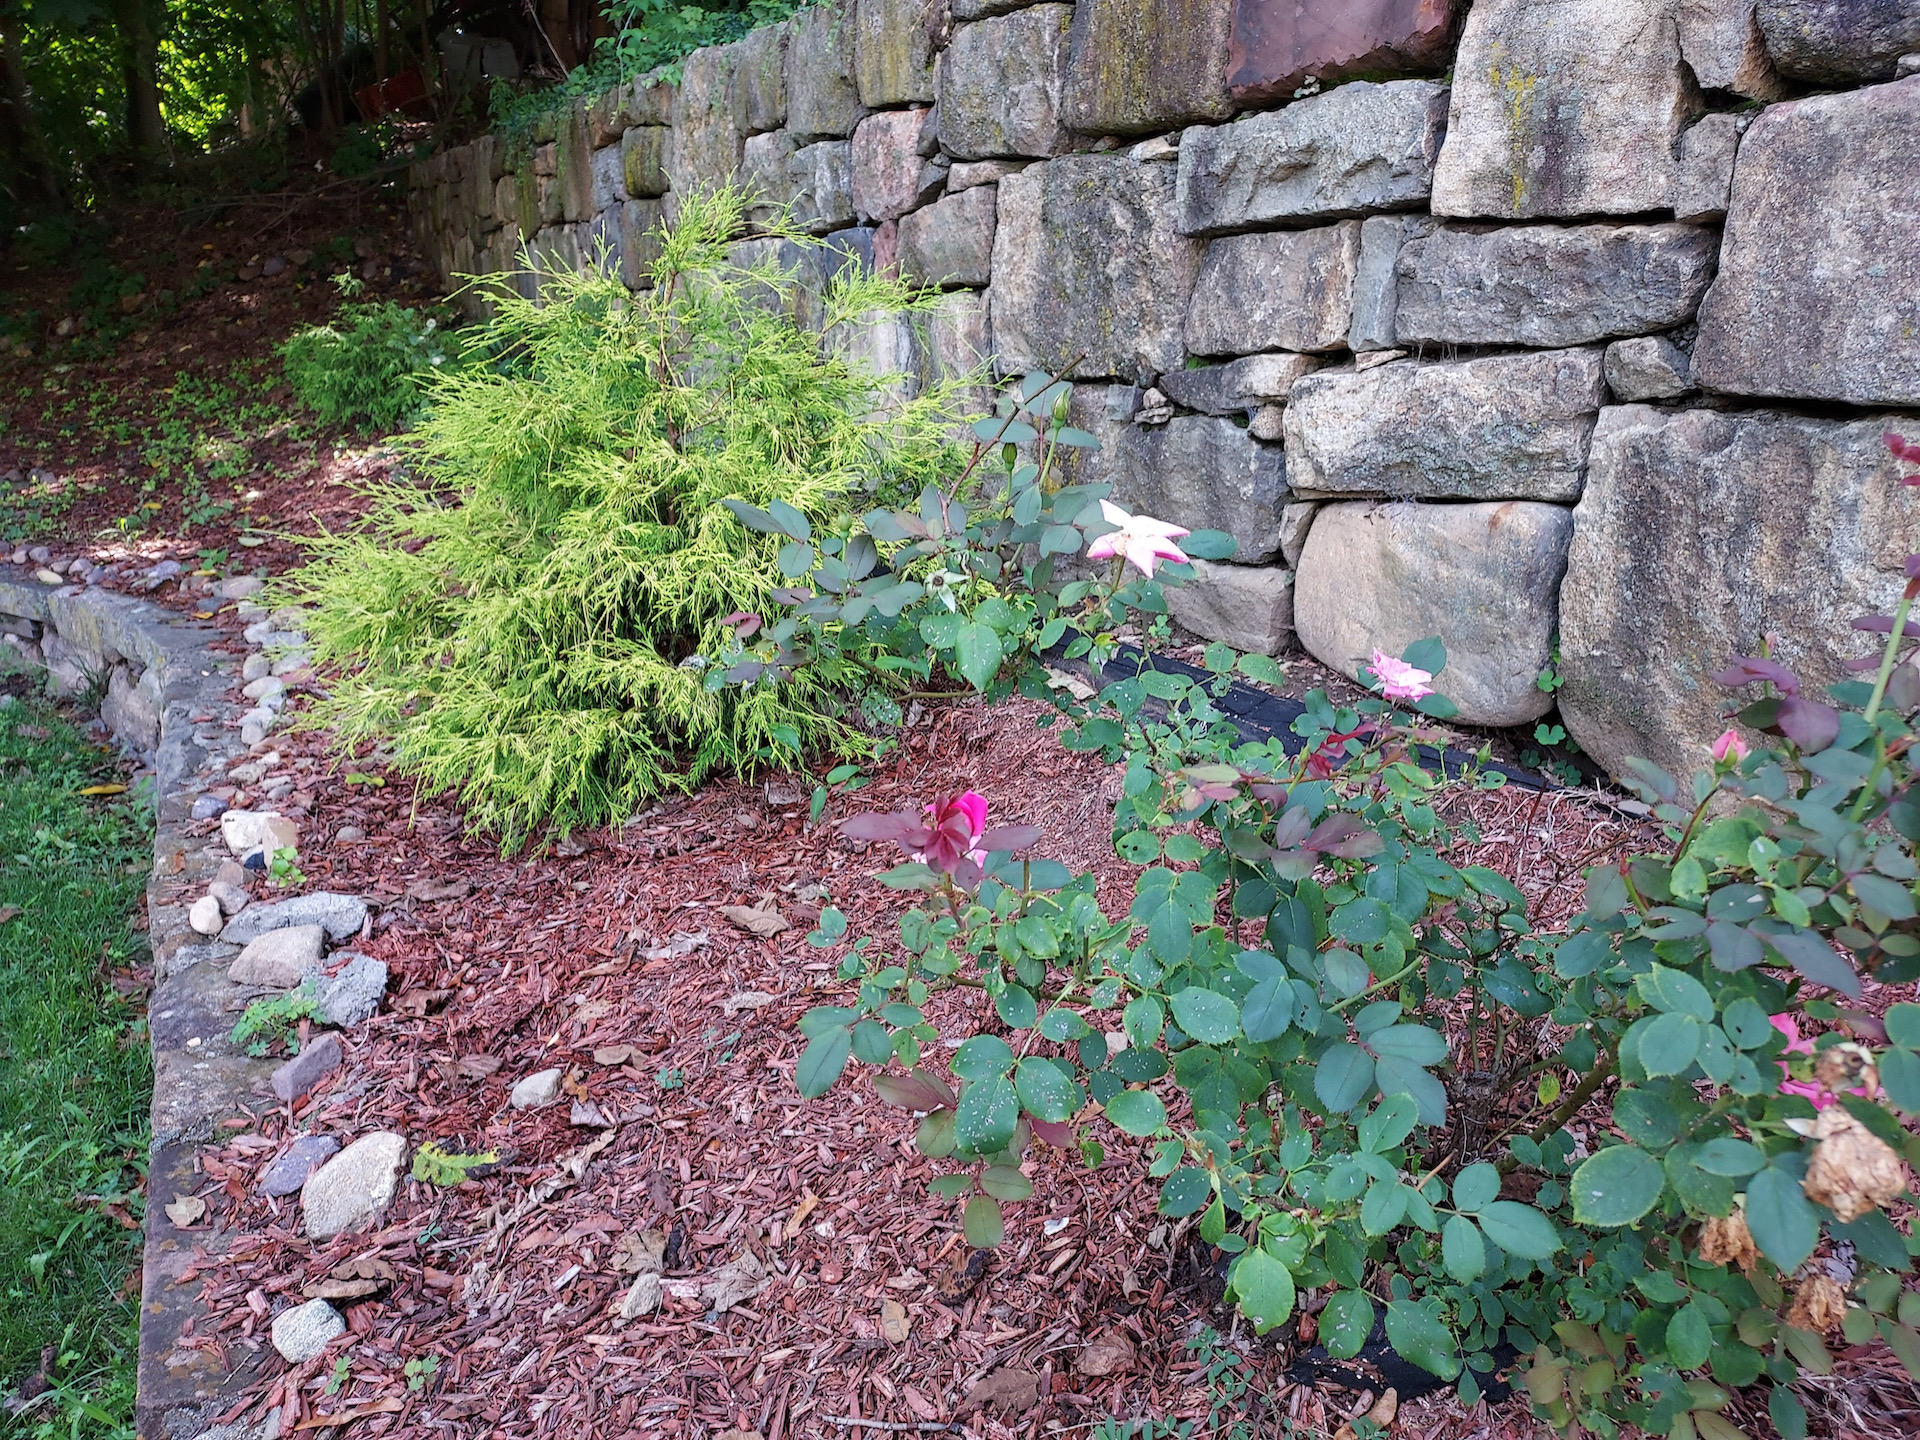 Samsung Galaxy A42 photo sample showing bushes in a garden